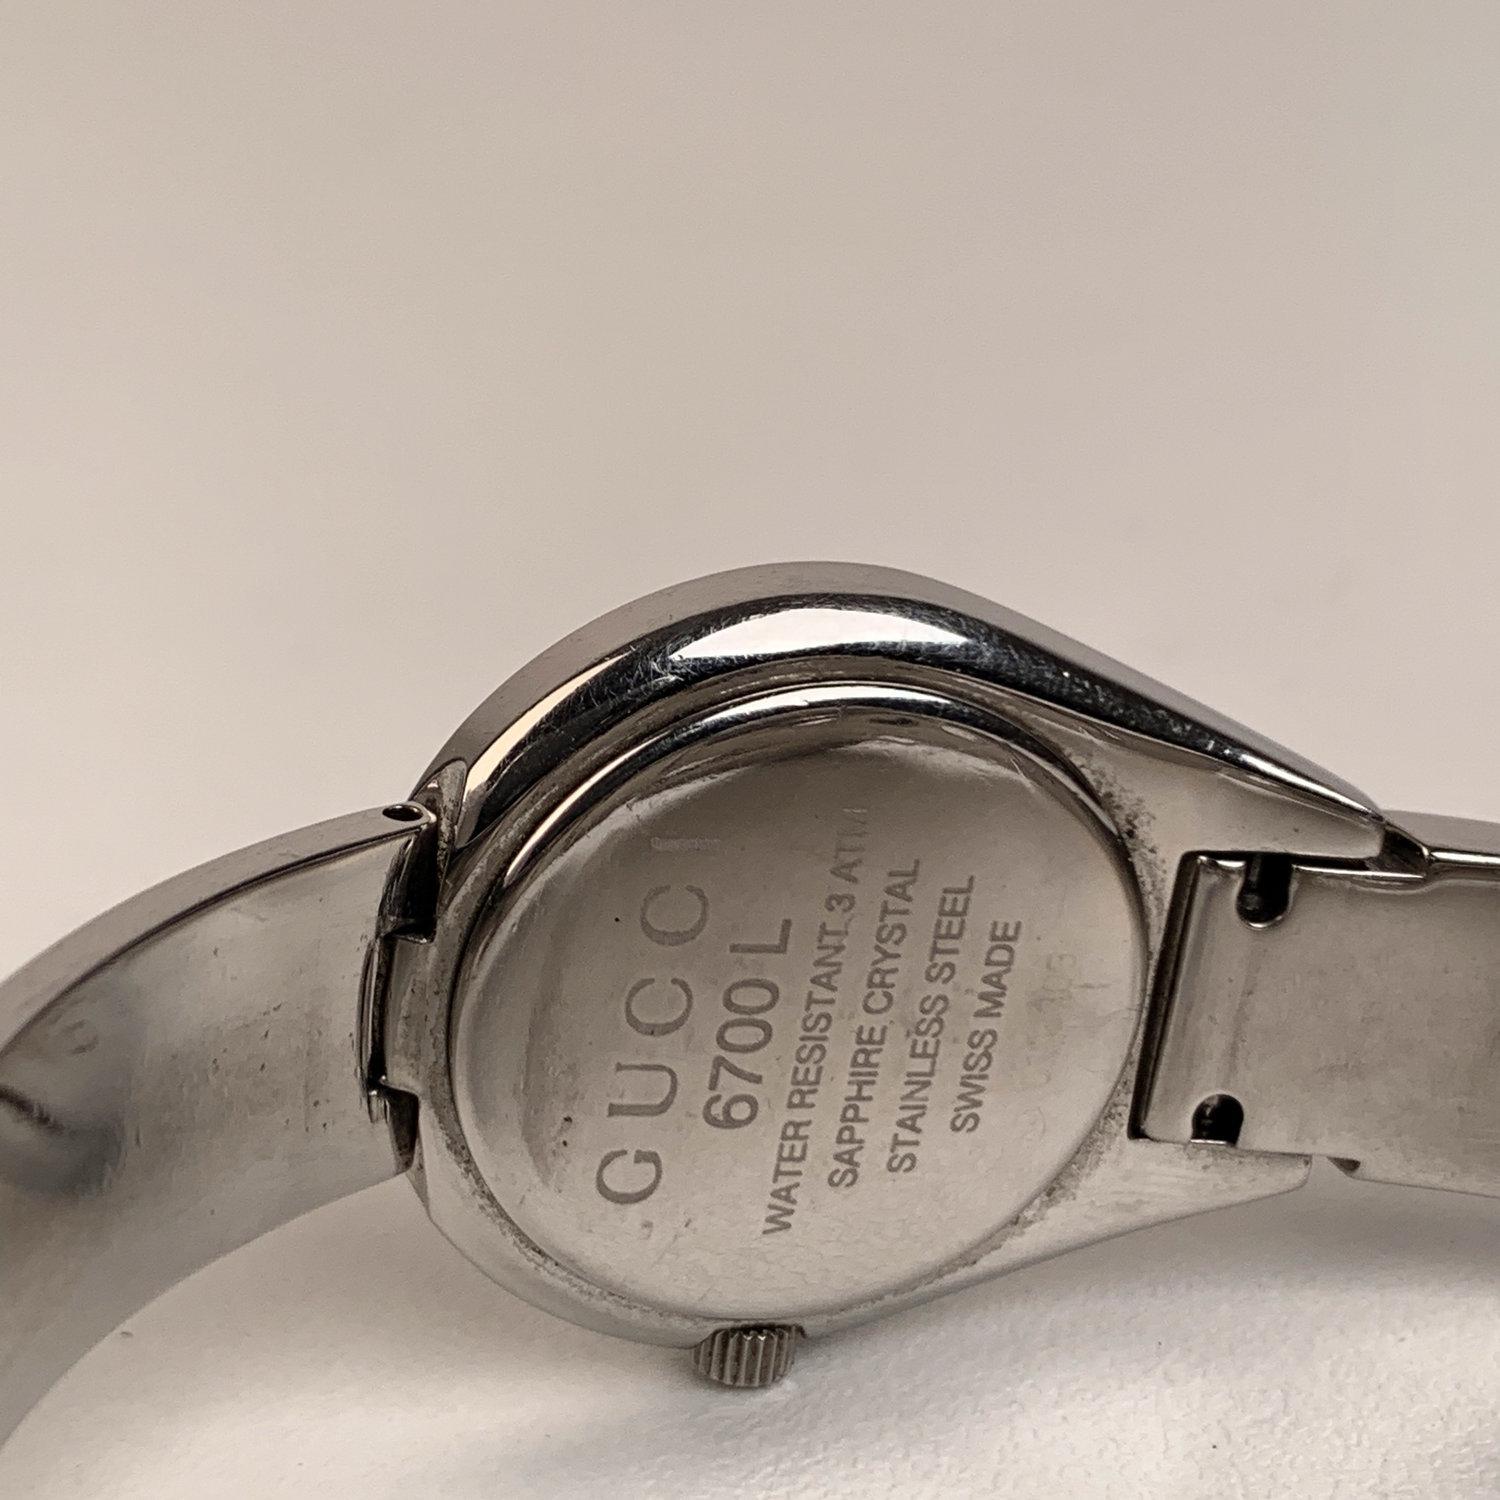 gucci 6700l watch price